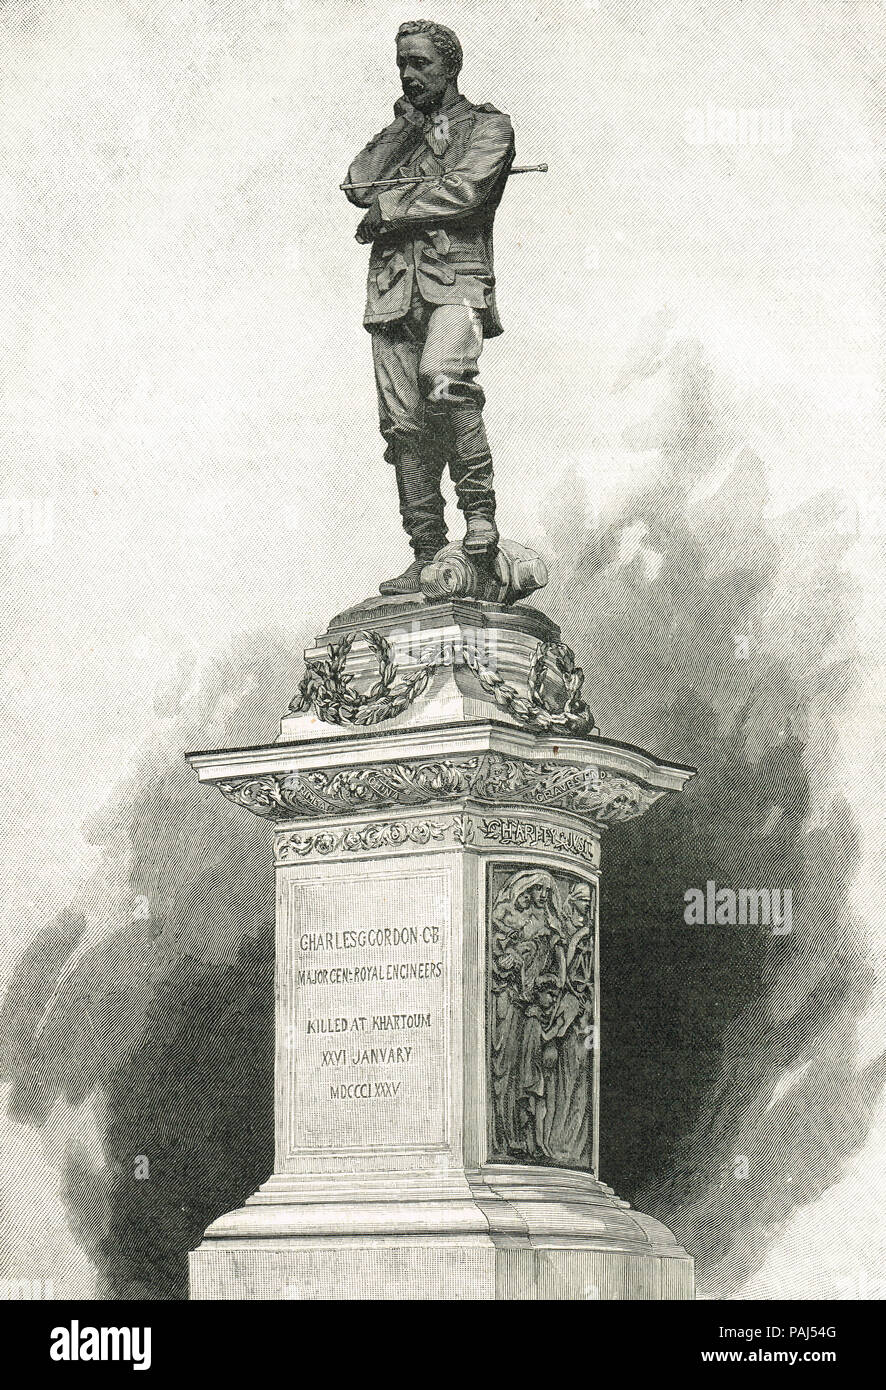 Estatua del General Gordon, Gordon de Khartoum, 1833-1885, monumento por Sir William Hamo Thornycroft, Trafalgar Square, Londres, Inglaterra Foto de stock